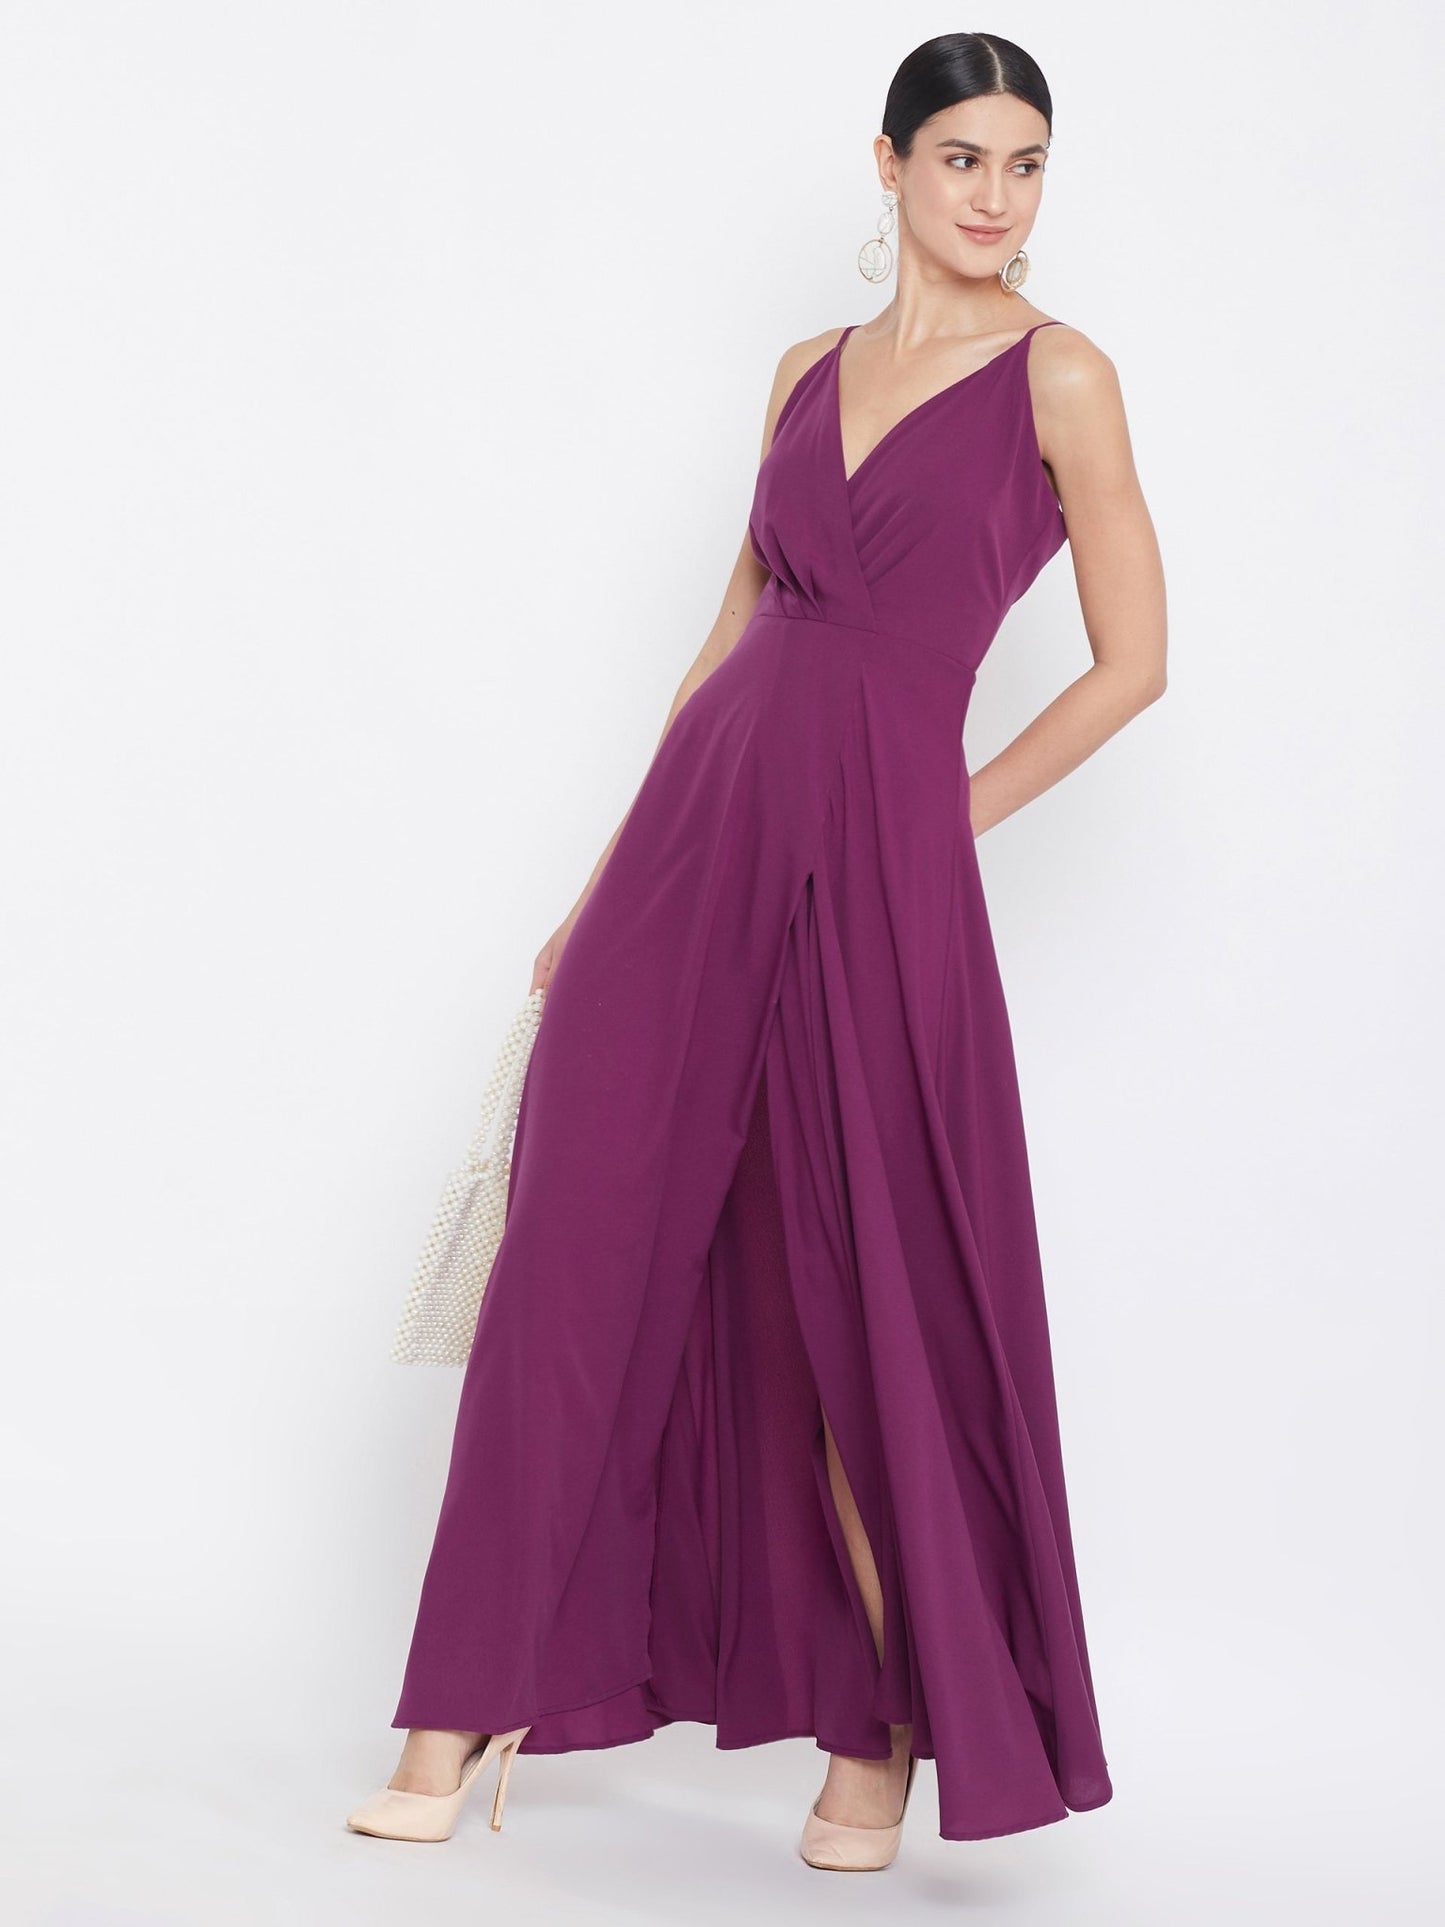 Folk Republic Women Solid Dark Purple V-Neck A-Line Maxi Dress - #folk republic#